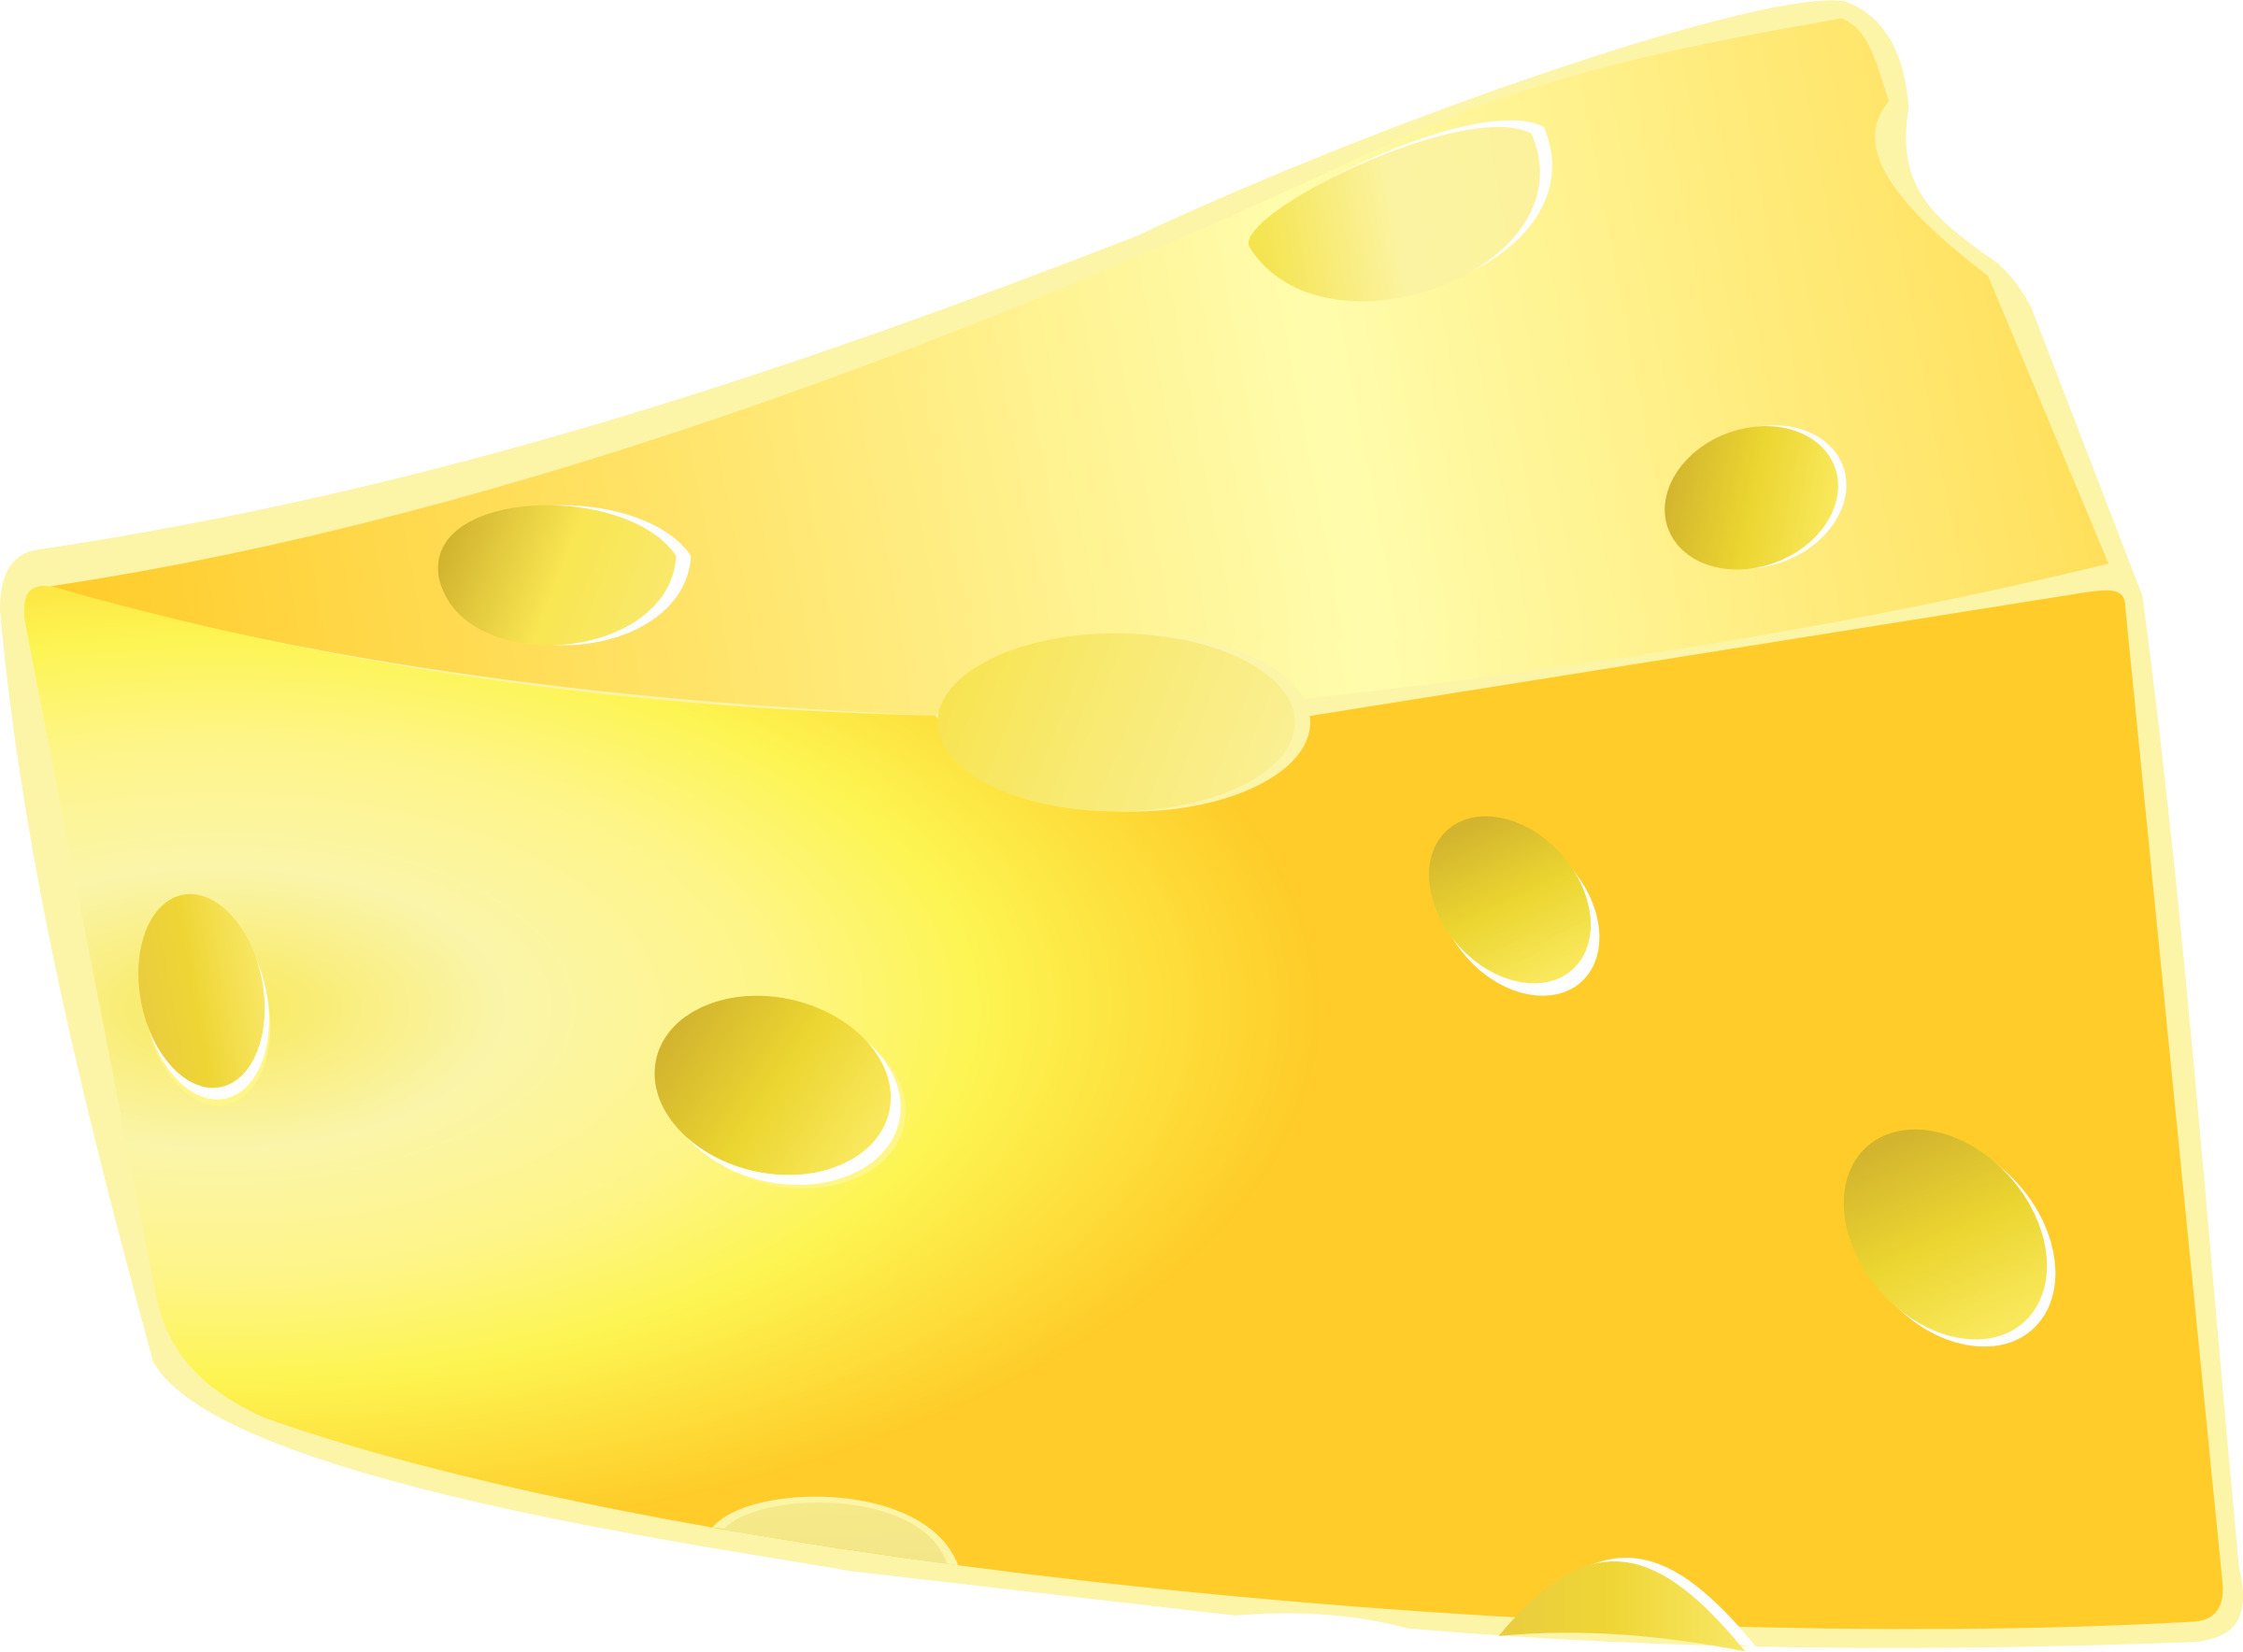 Swiss cheese clipart kid